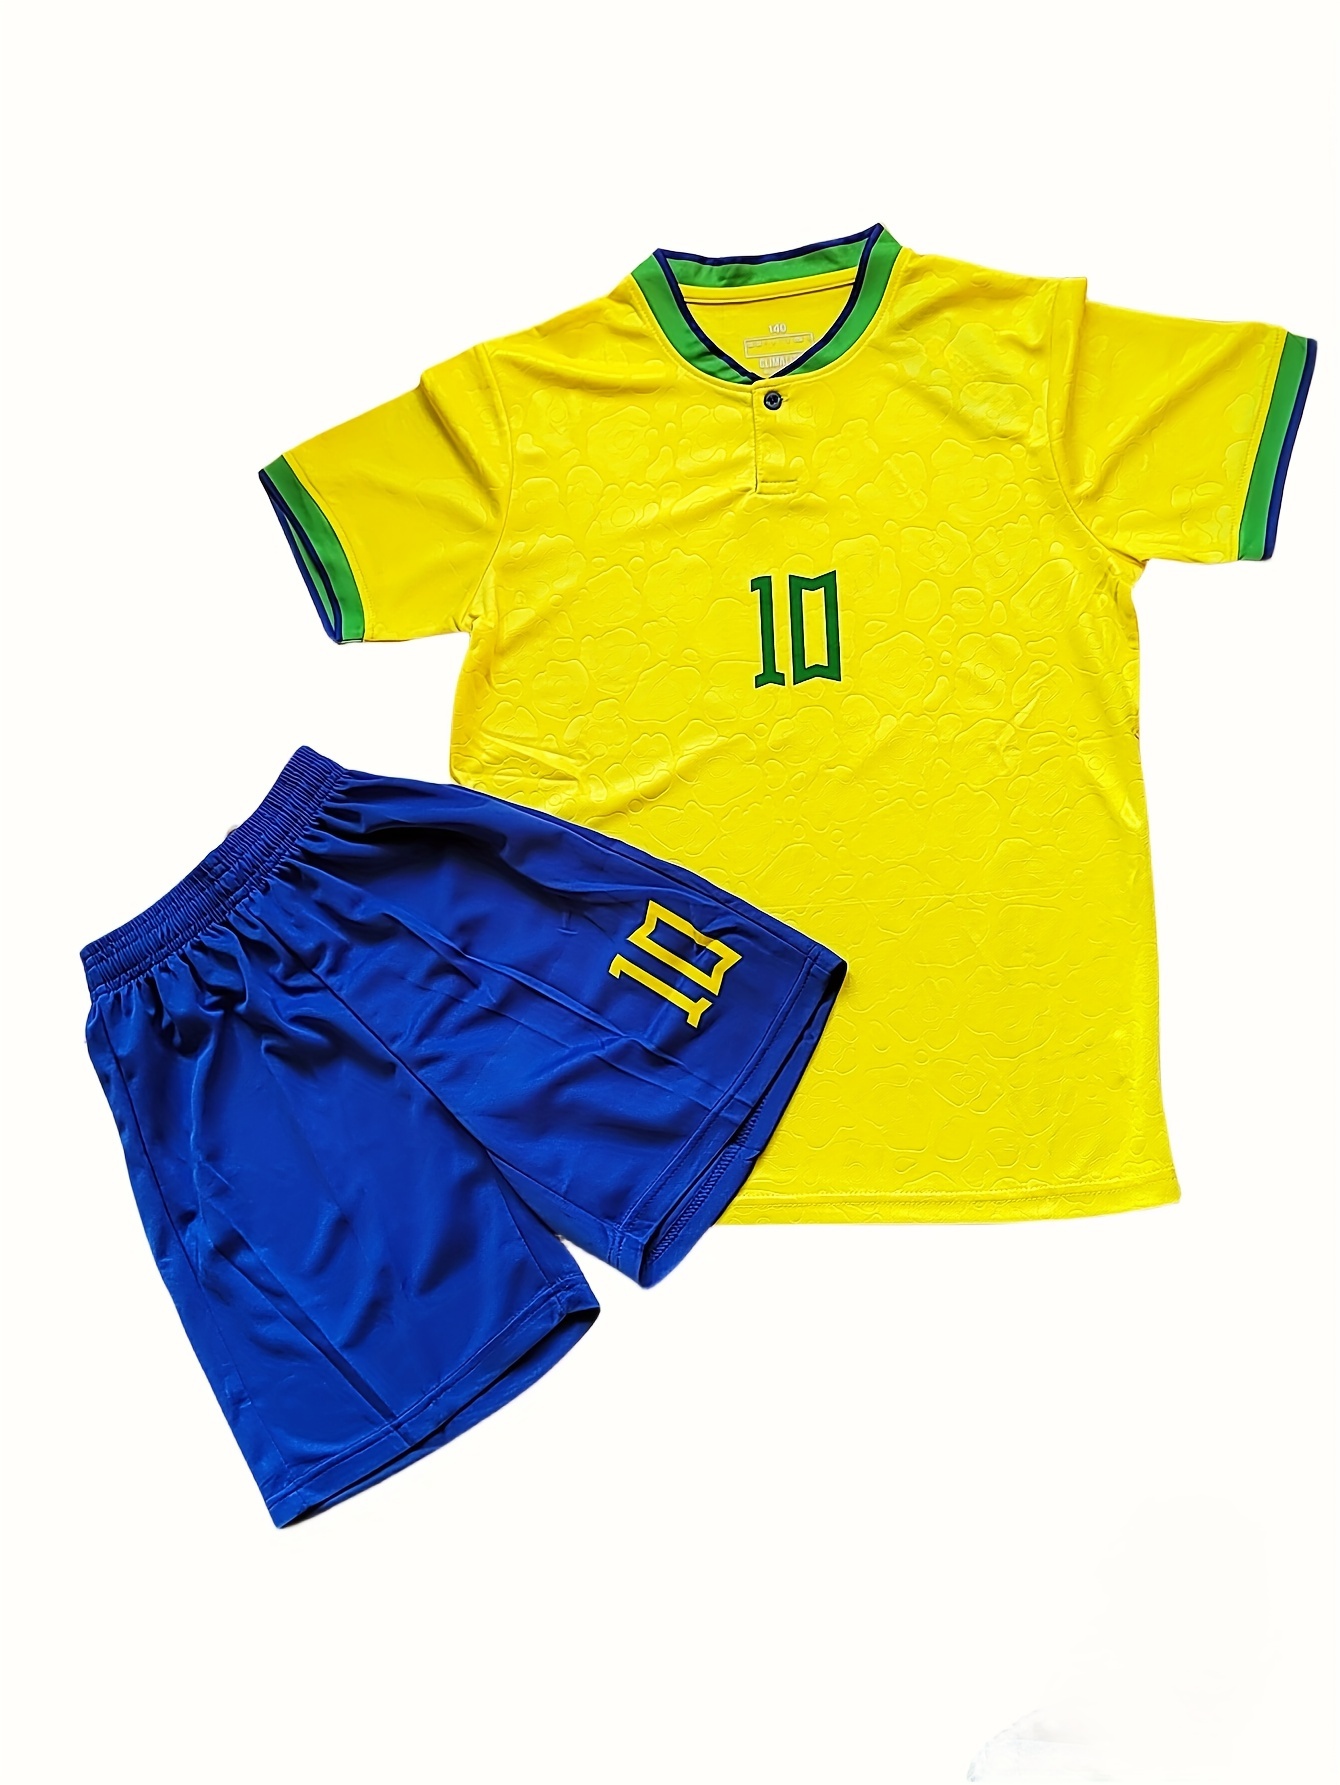 Blackshirt Company Brazil Children's Sports Tracksuit Football World Cup  European Championship Fan 2-Piece Yellow Blue, yellow : : Fashion